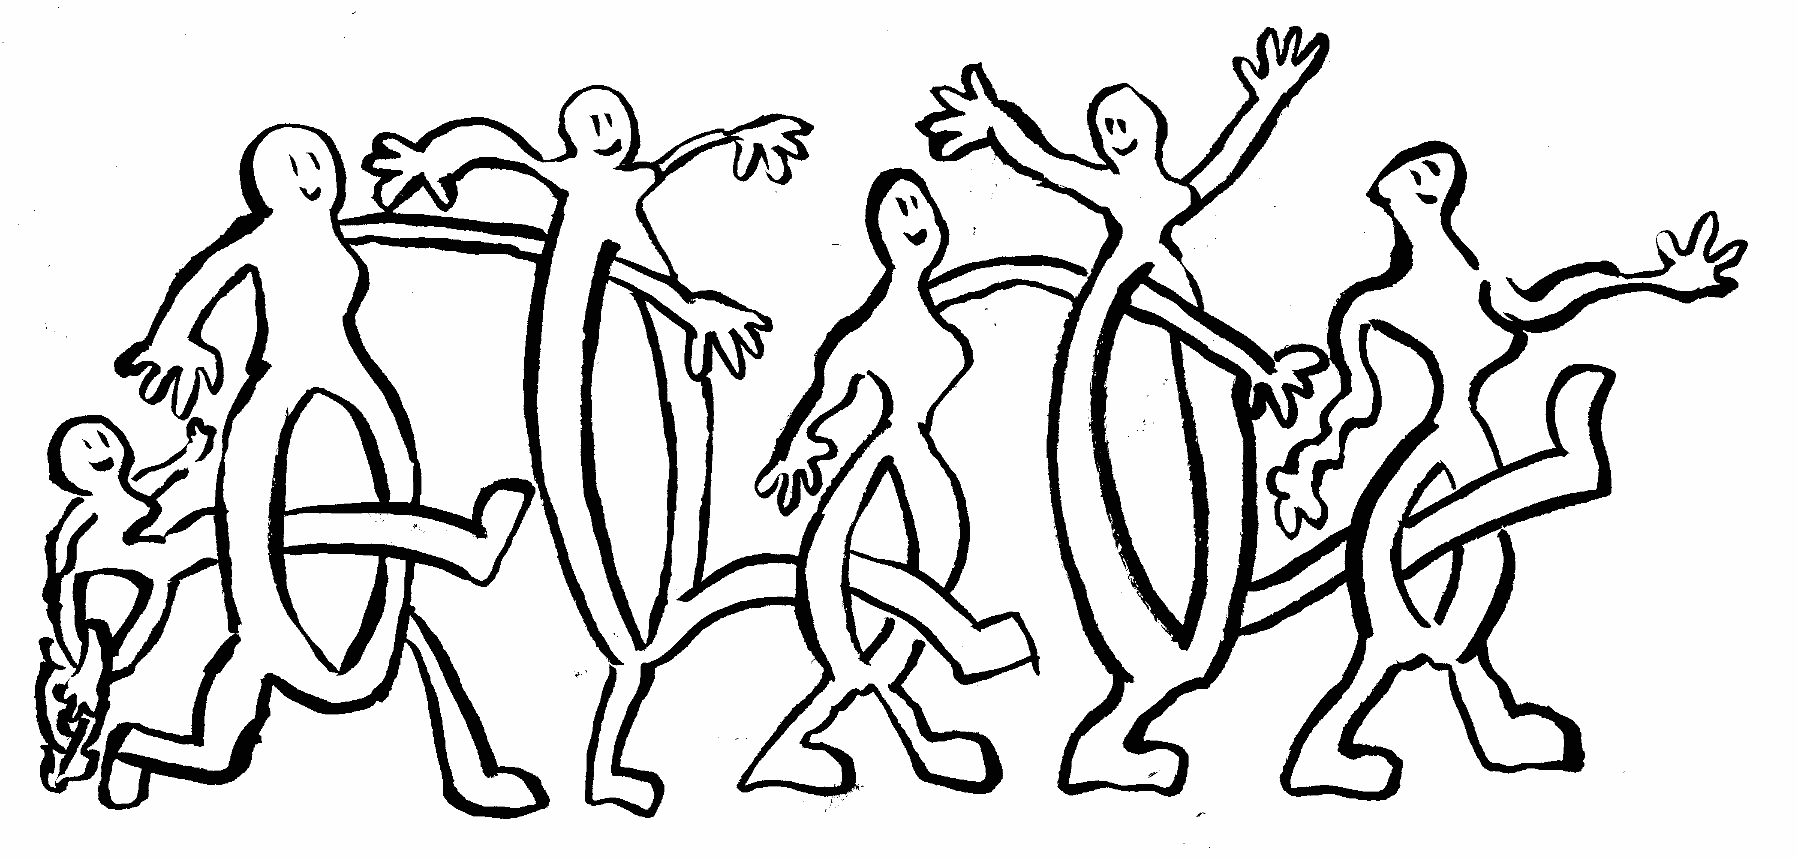 Swollen Members abstract bodies